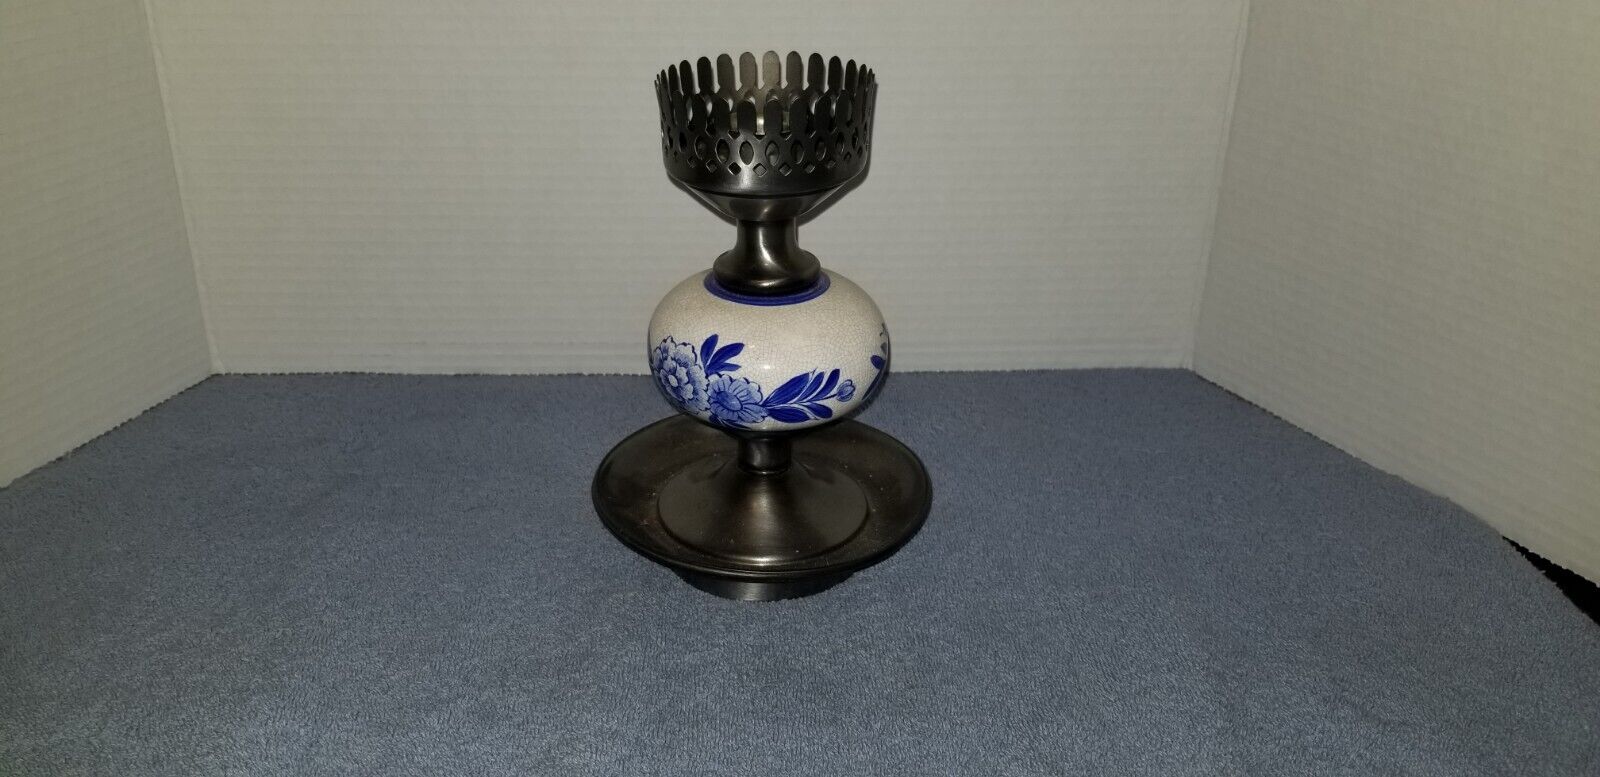 Vintage Ceramic Hurricane Candle Holder Lamp Blue Flower Print